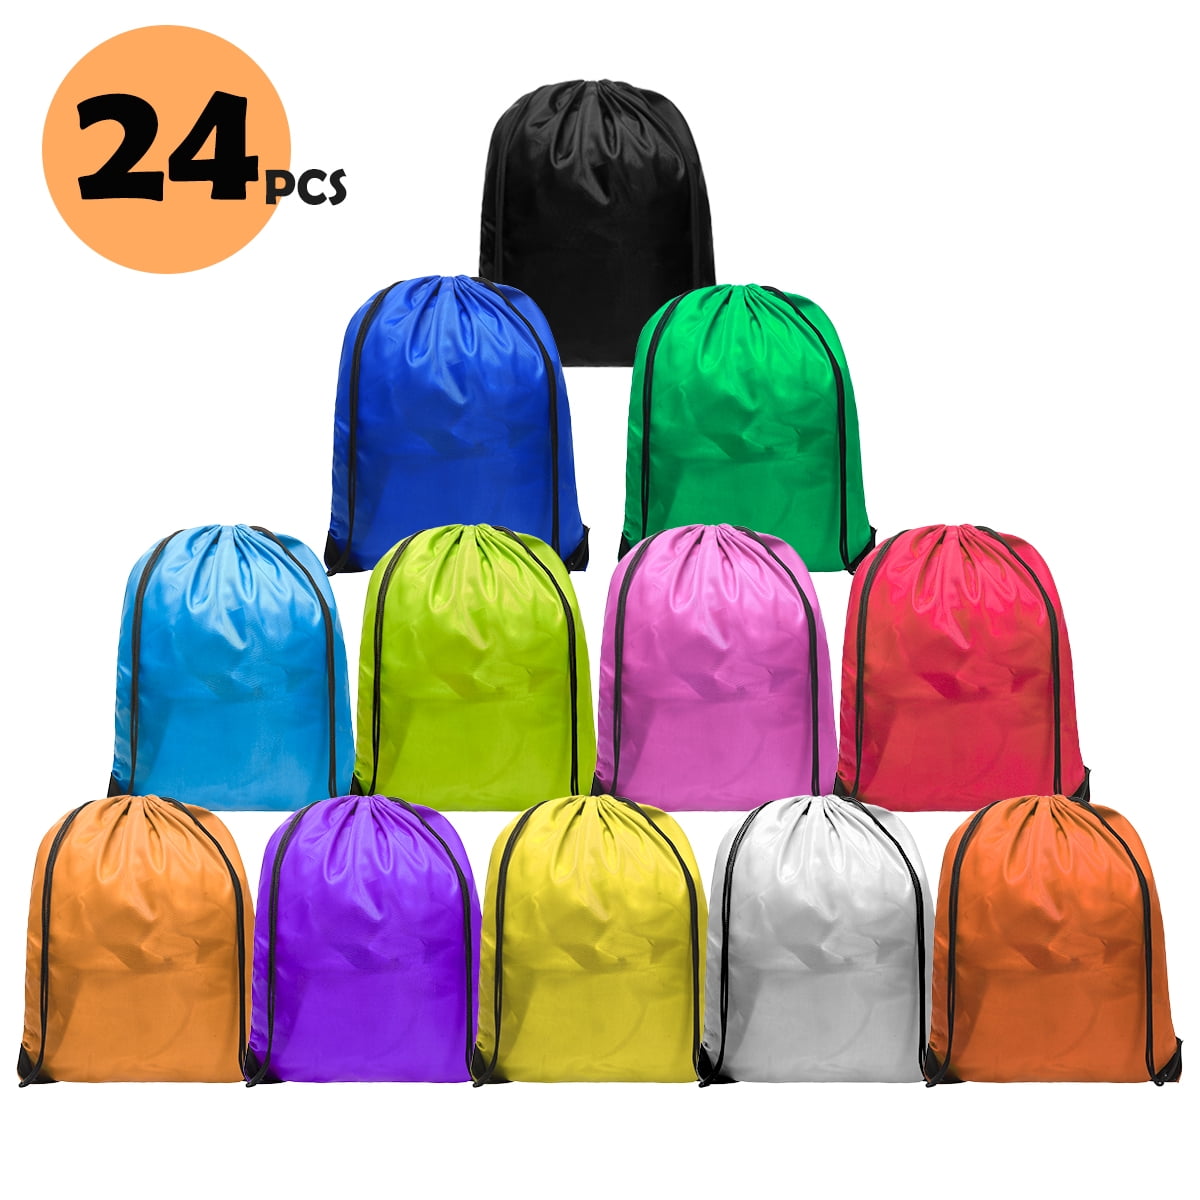 PACK of 5 School Drawstring Book Bag Premium Quality Sport Backpack Gym Dance 